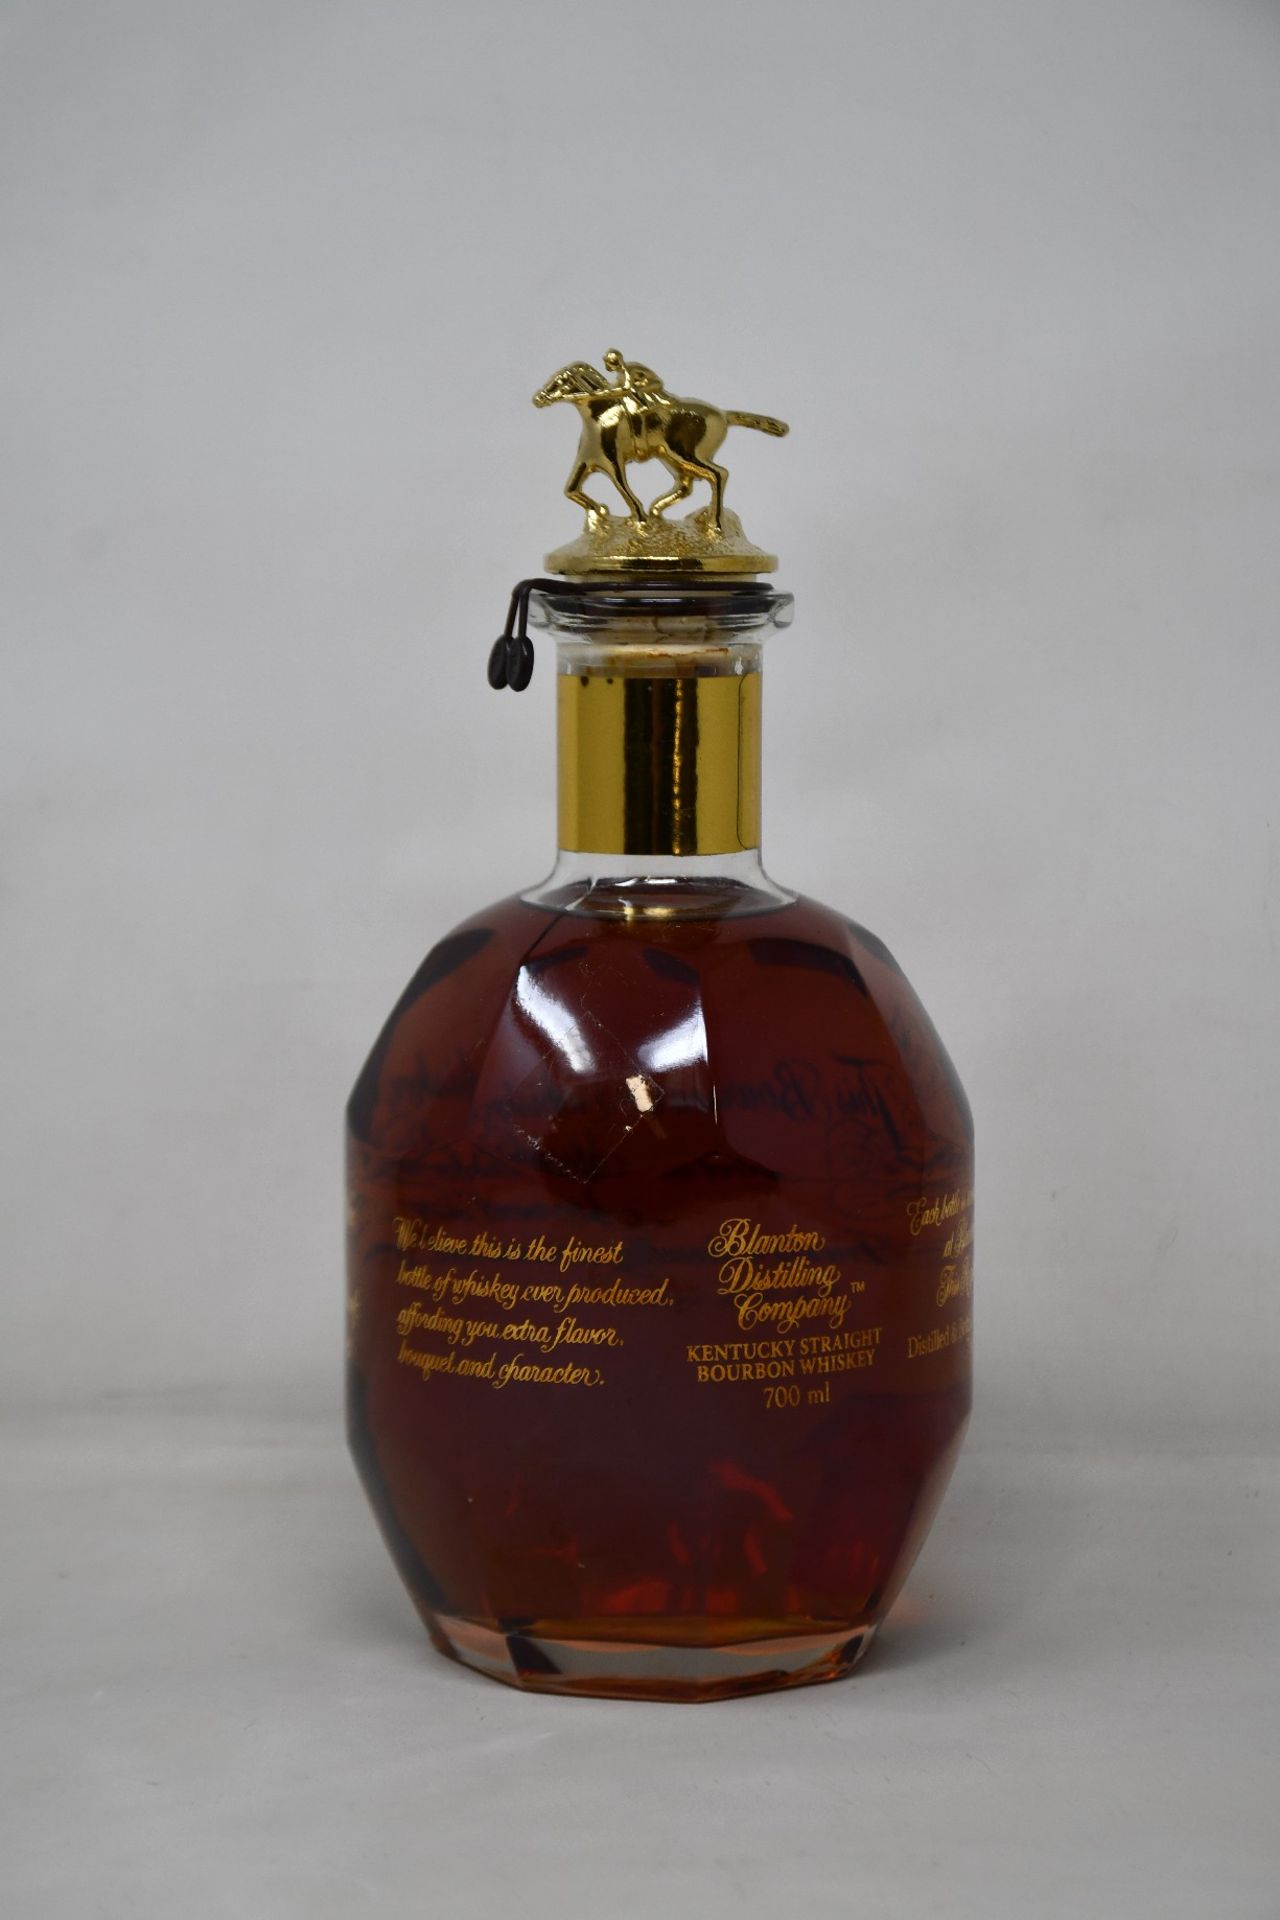 A bottle of Blanton's Kentucky straight bourbon whiskey (700ml) (Over 18s only).